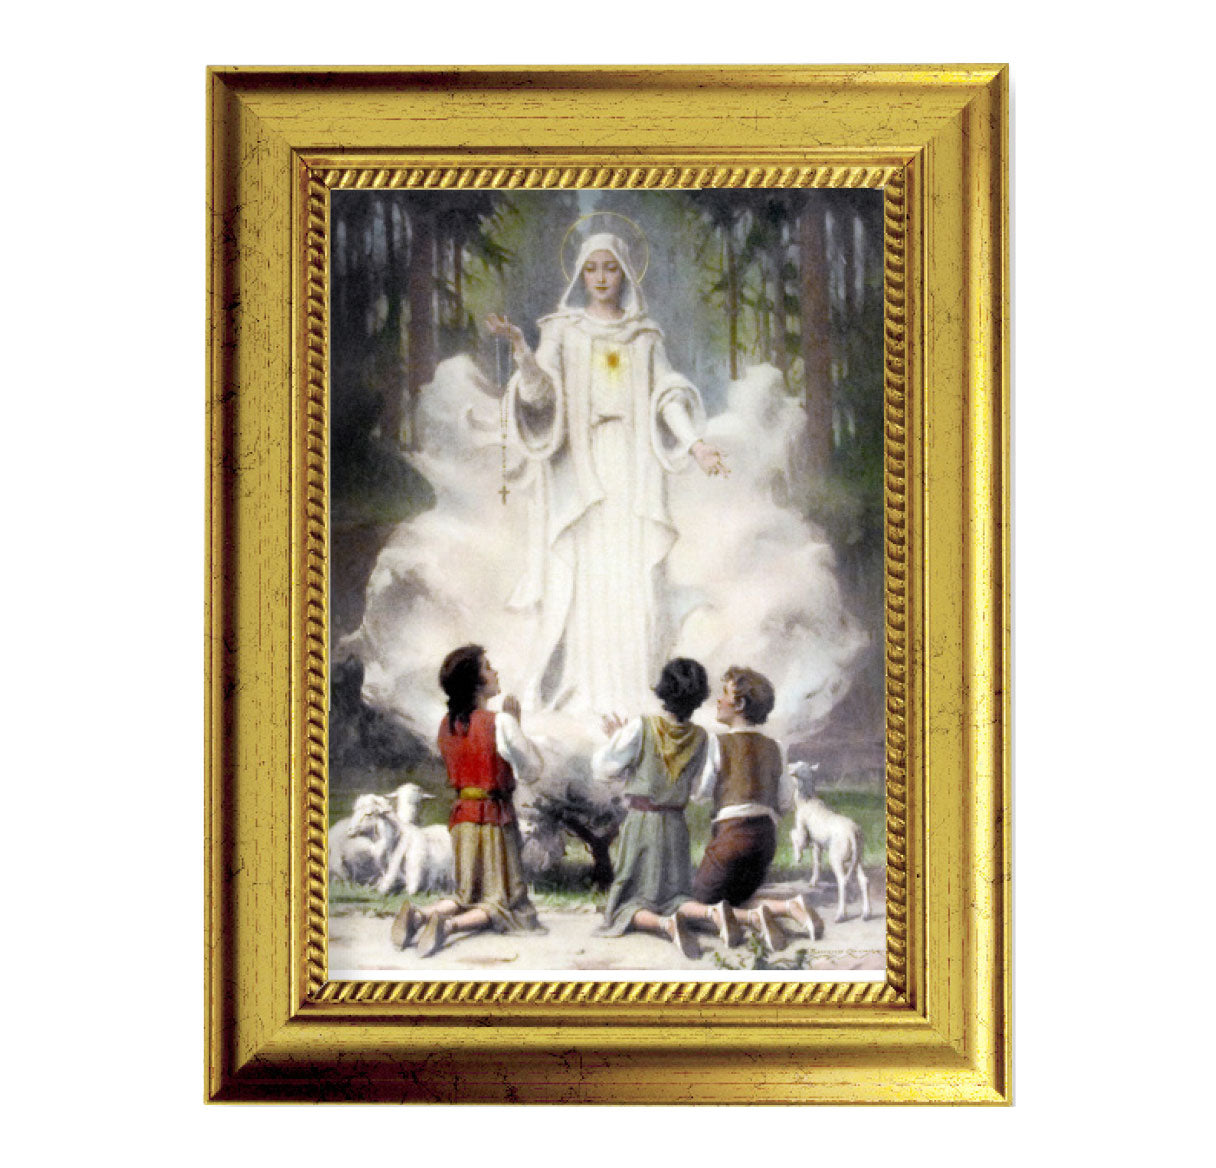 Our Lady of Fatima Gold-Leaf Framed Art